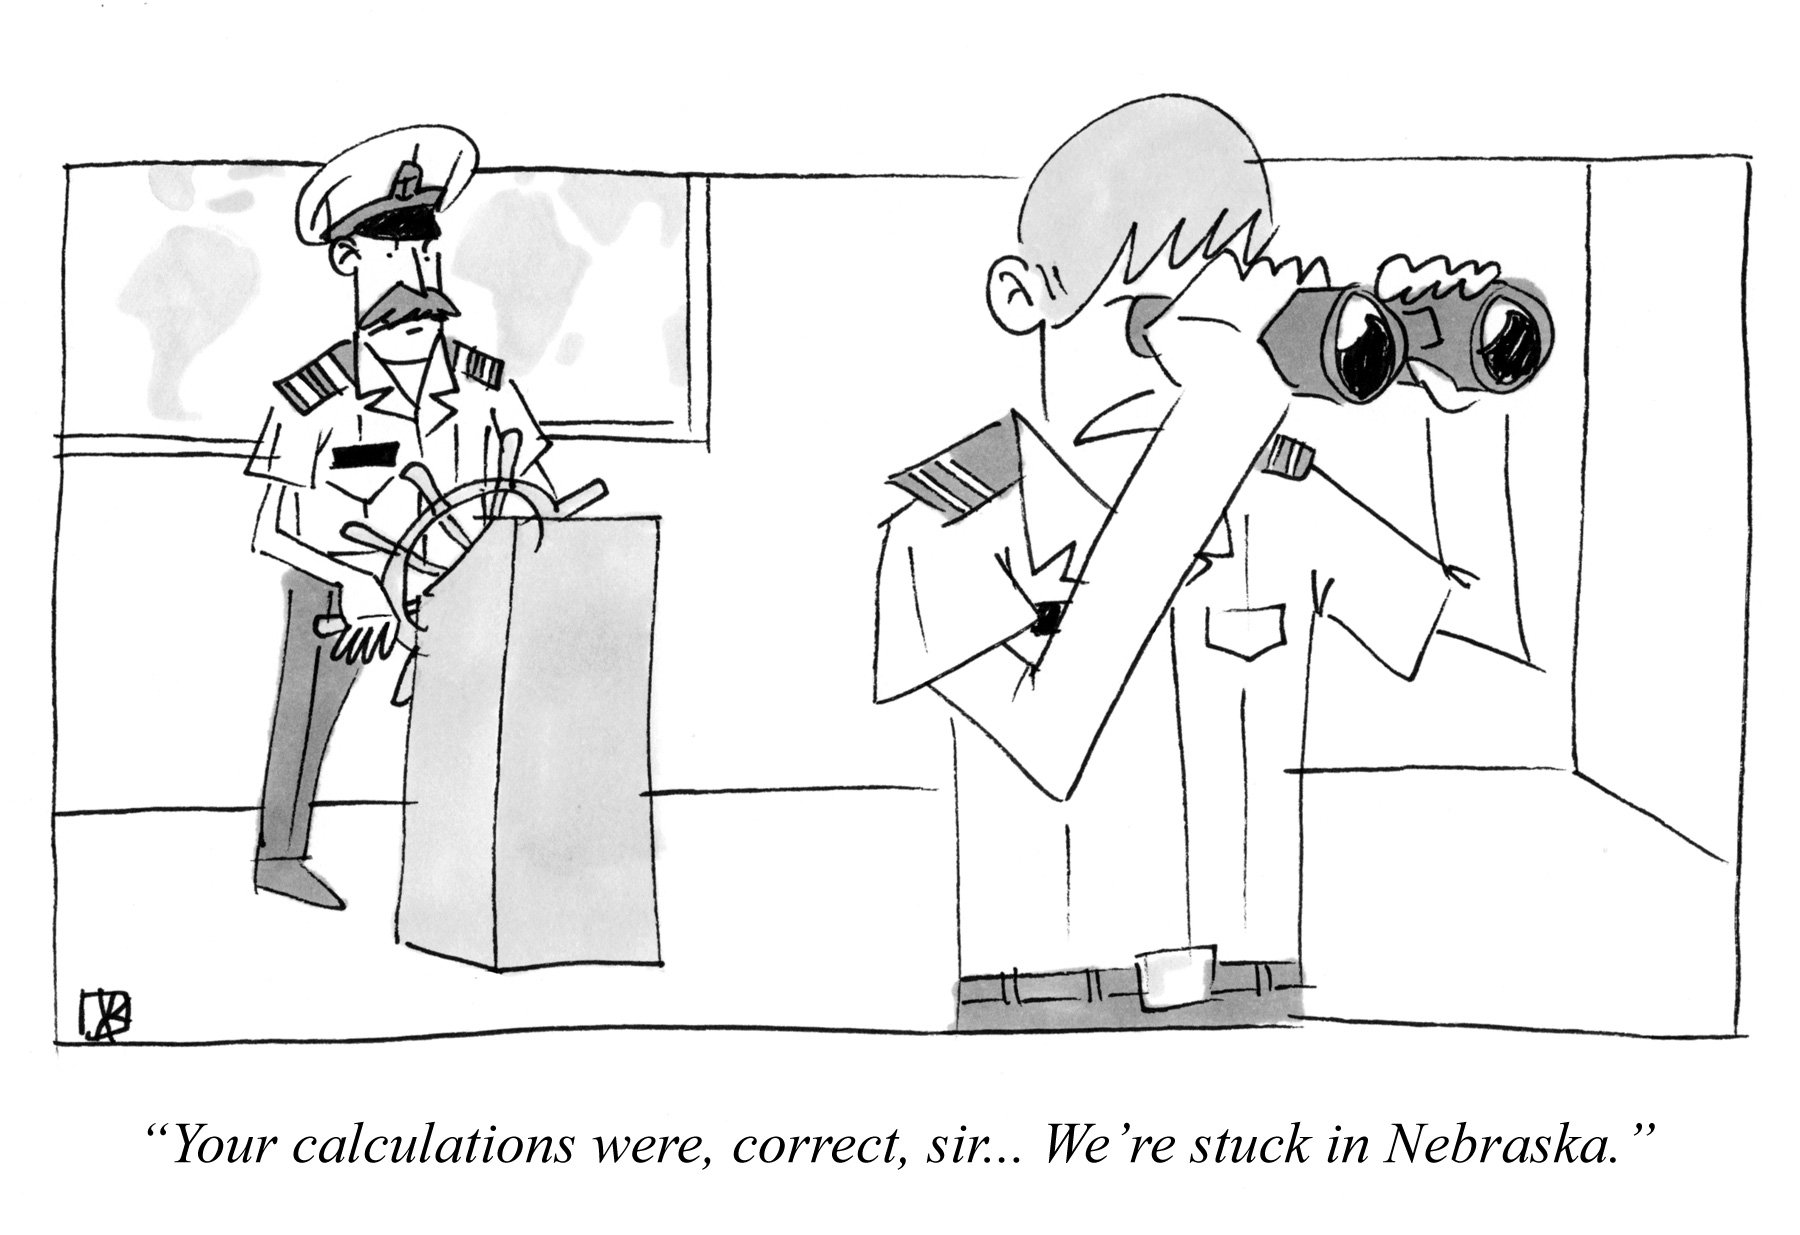 Your calculations were correct, sir... We're stuck in Nebraska.